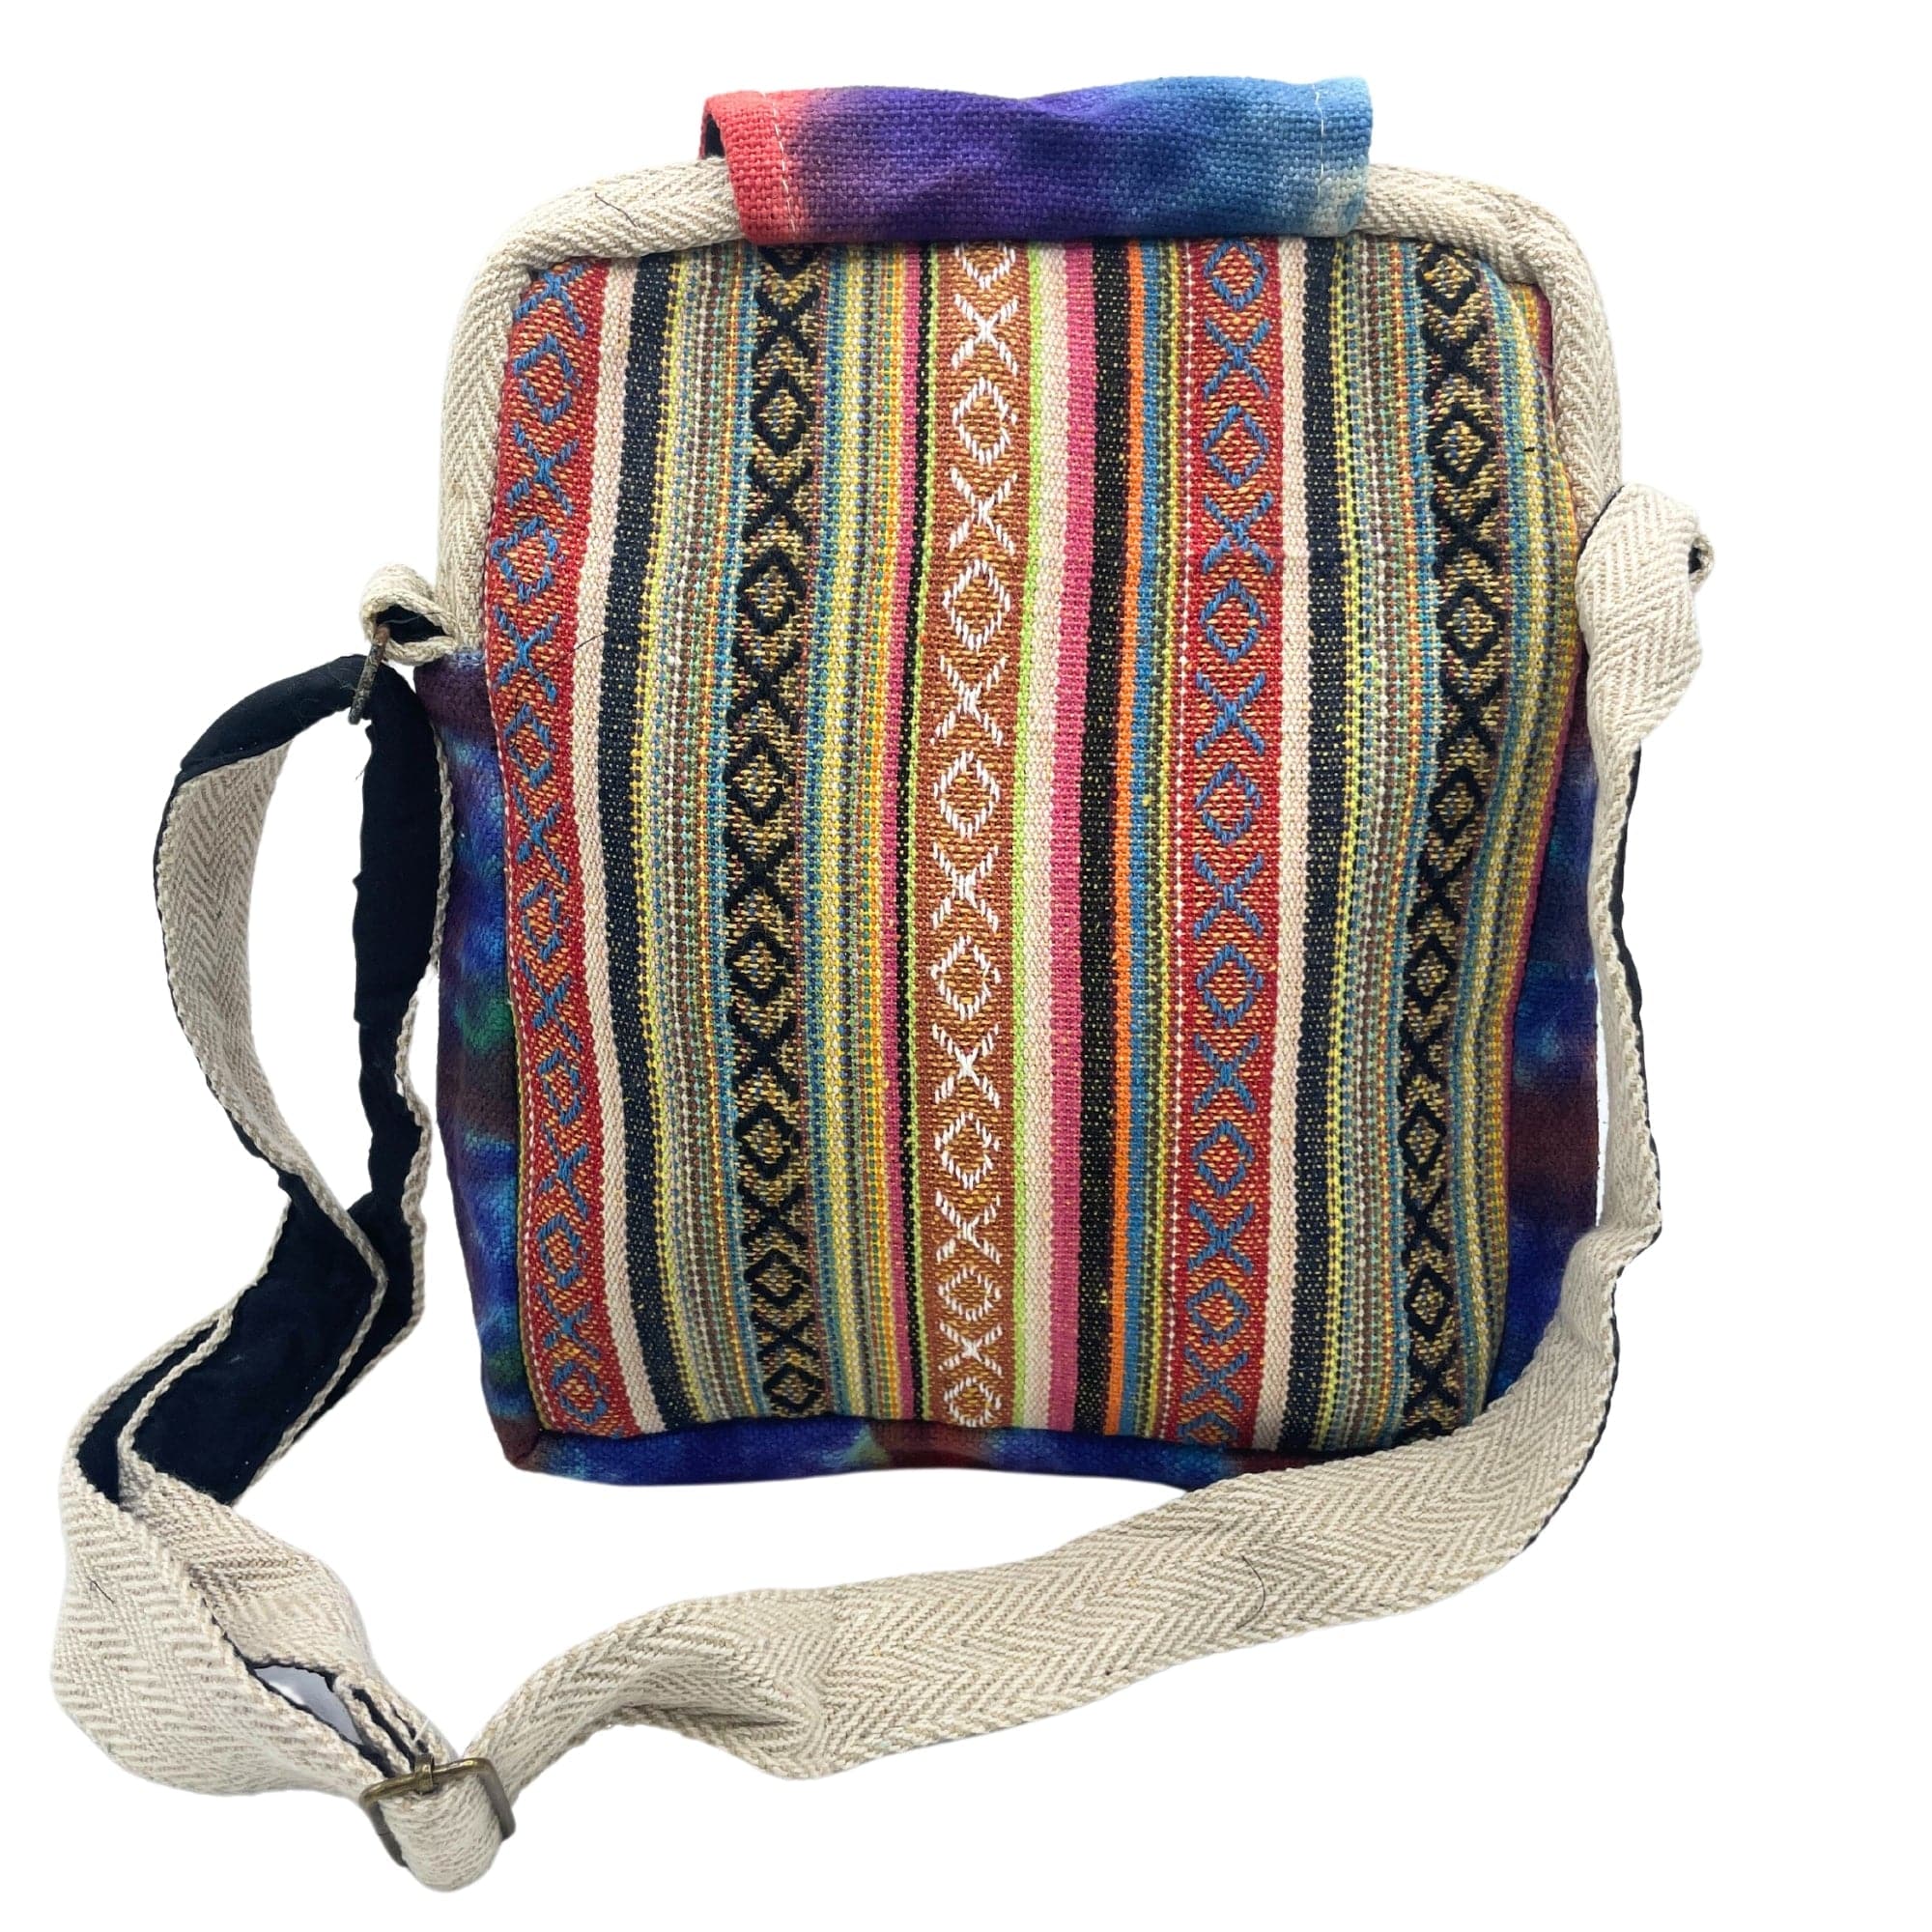 Tiedye Hemp Messegner Bag 2 Zip & Flop - Premium  from Bliss - Just €25.20! Shop now at Maltashopper.com